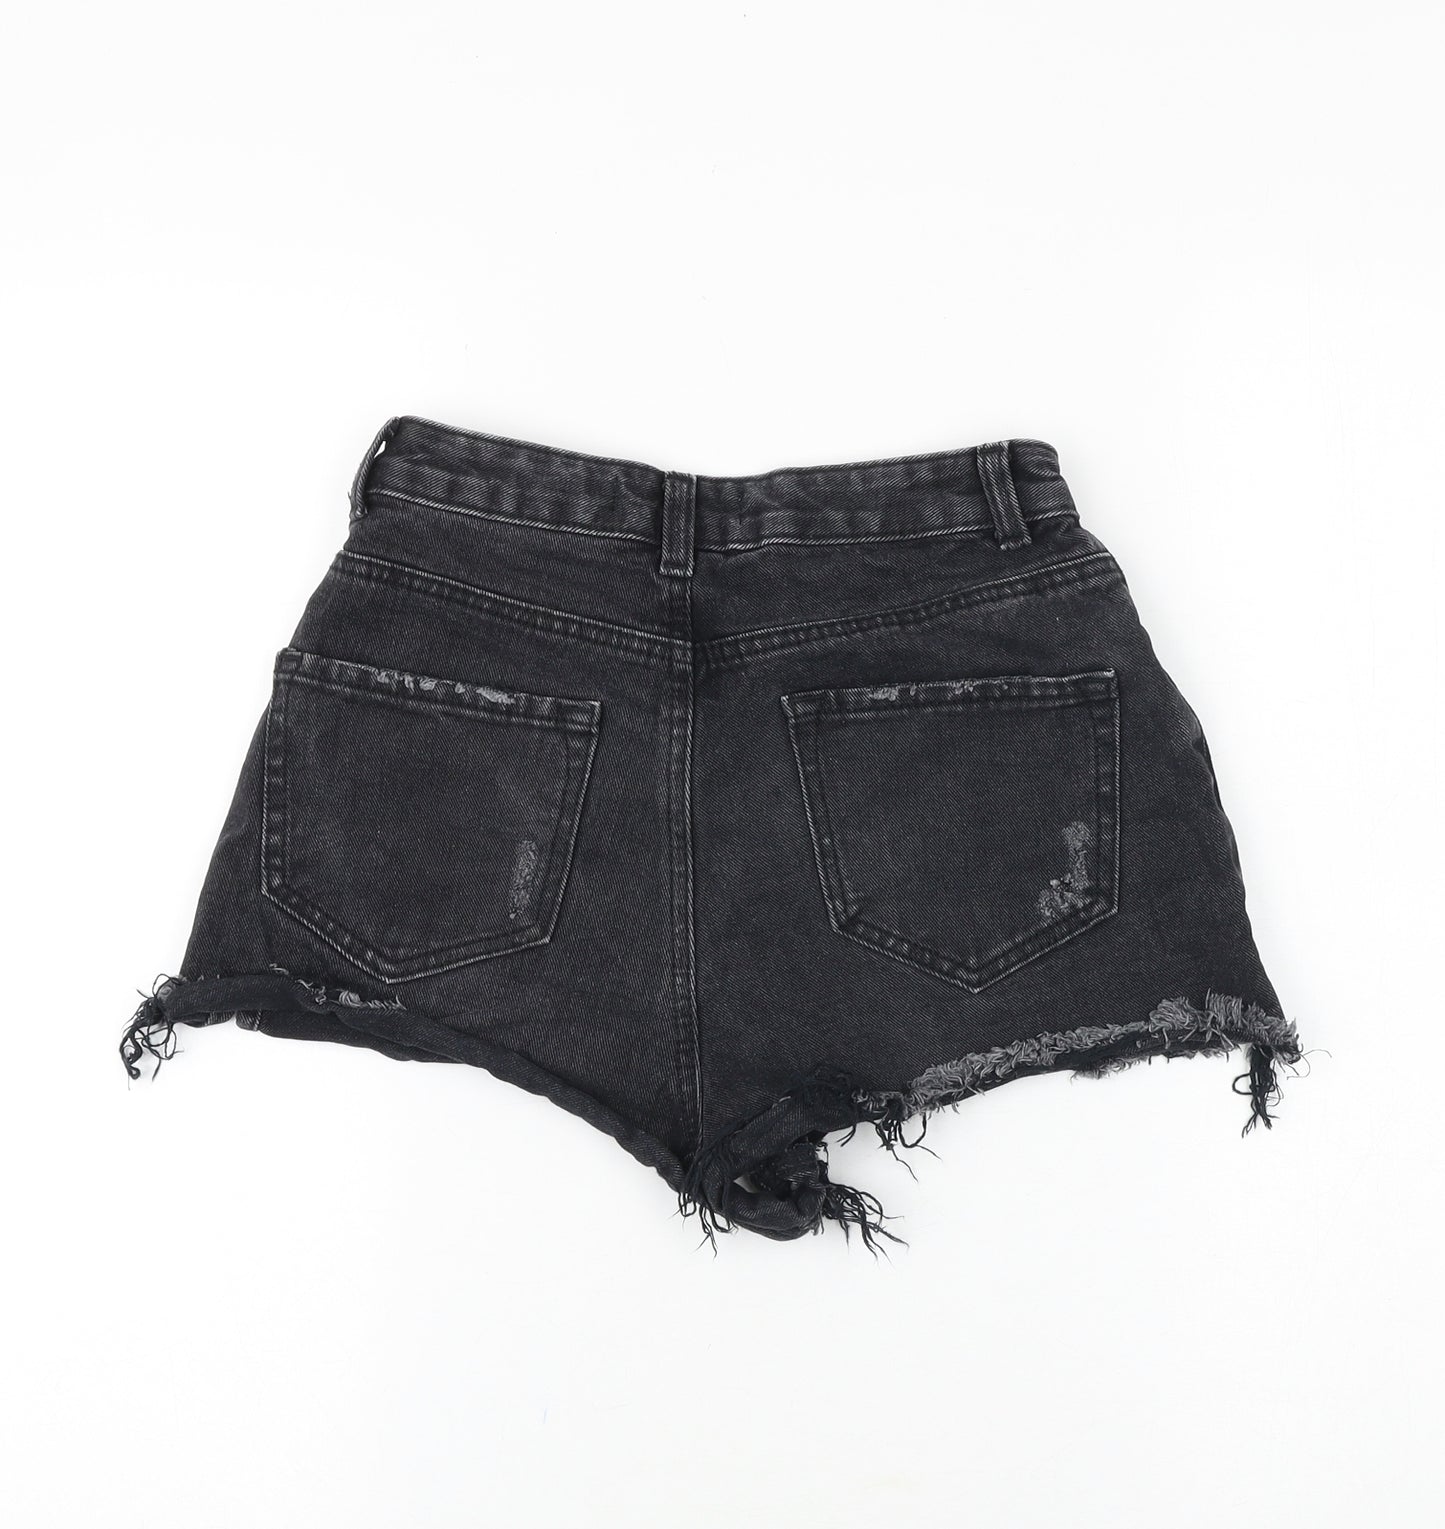 Denim & Co. Womens Black Cotton Hot Pants Shorts Size 8 Regular Zip